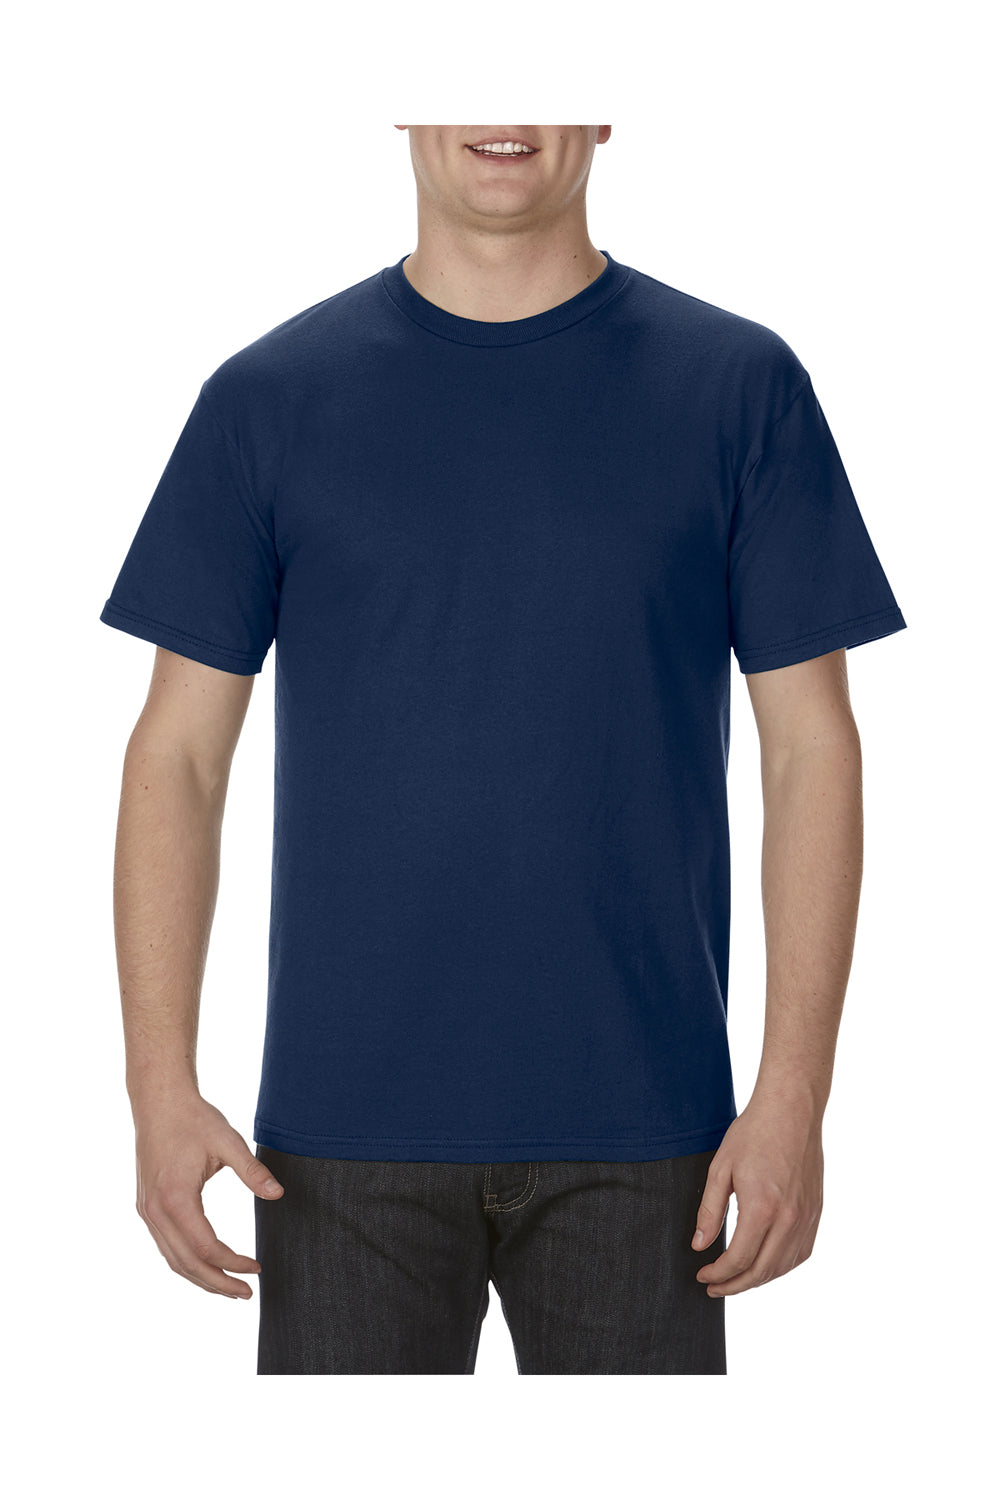 Alstyle AL1701 Mens Soft Spun Short Sleeve Crewneck T-Shirt Navy Blue Front